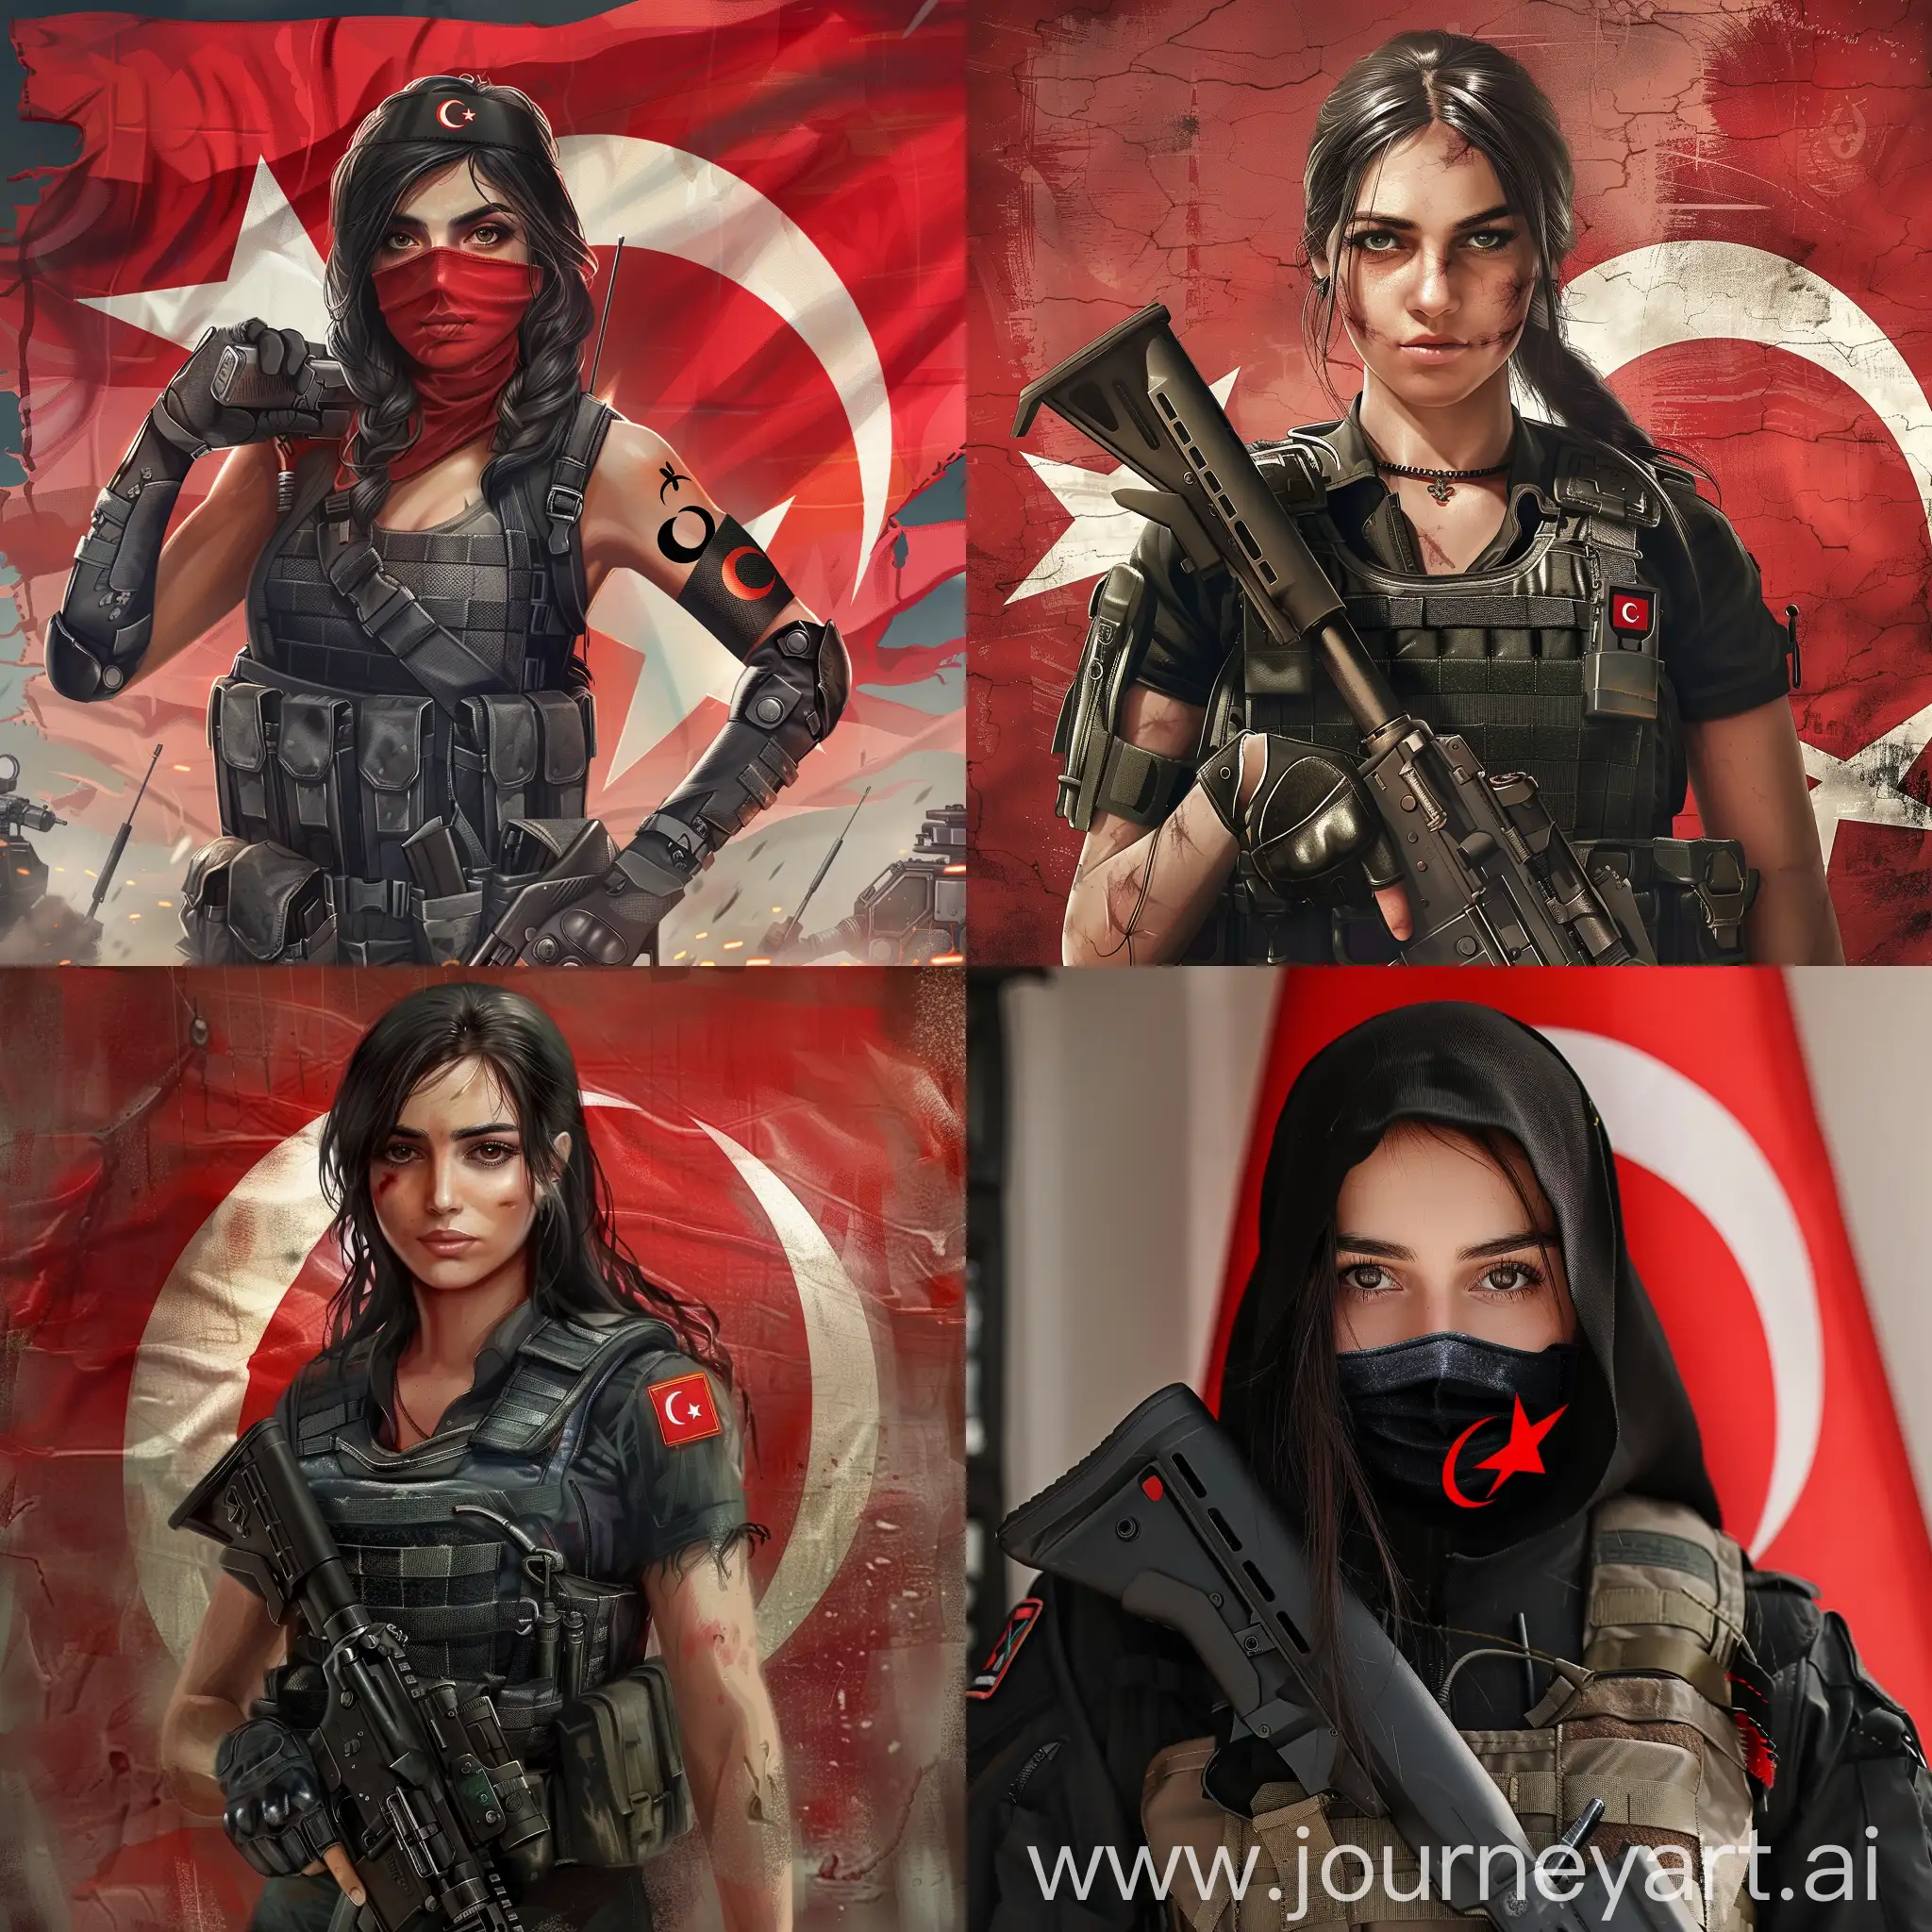 realistic swat Girl türkish flag

